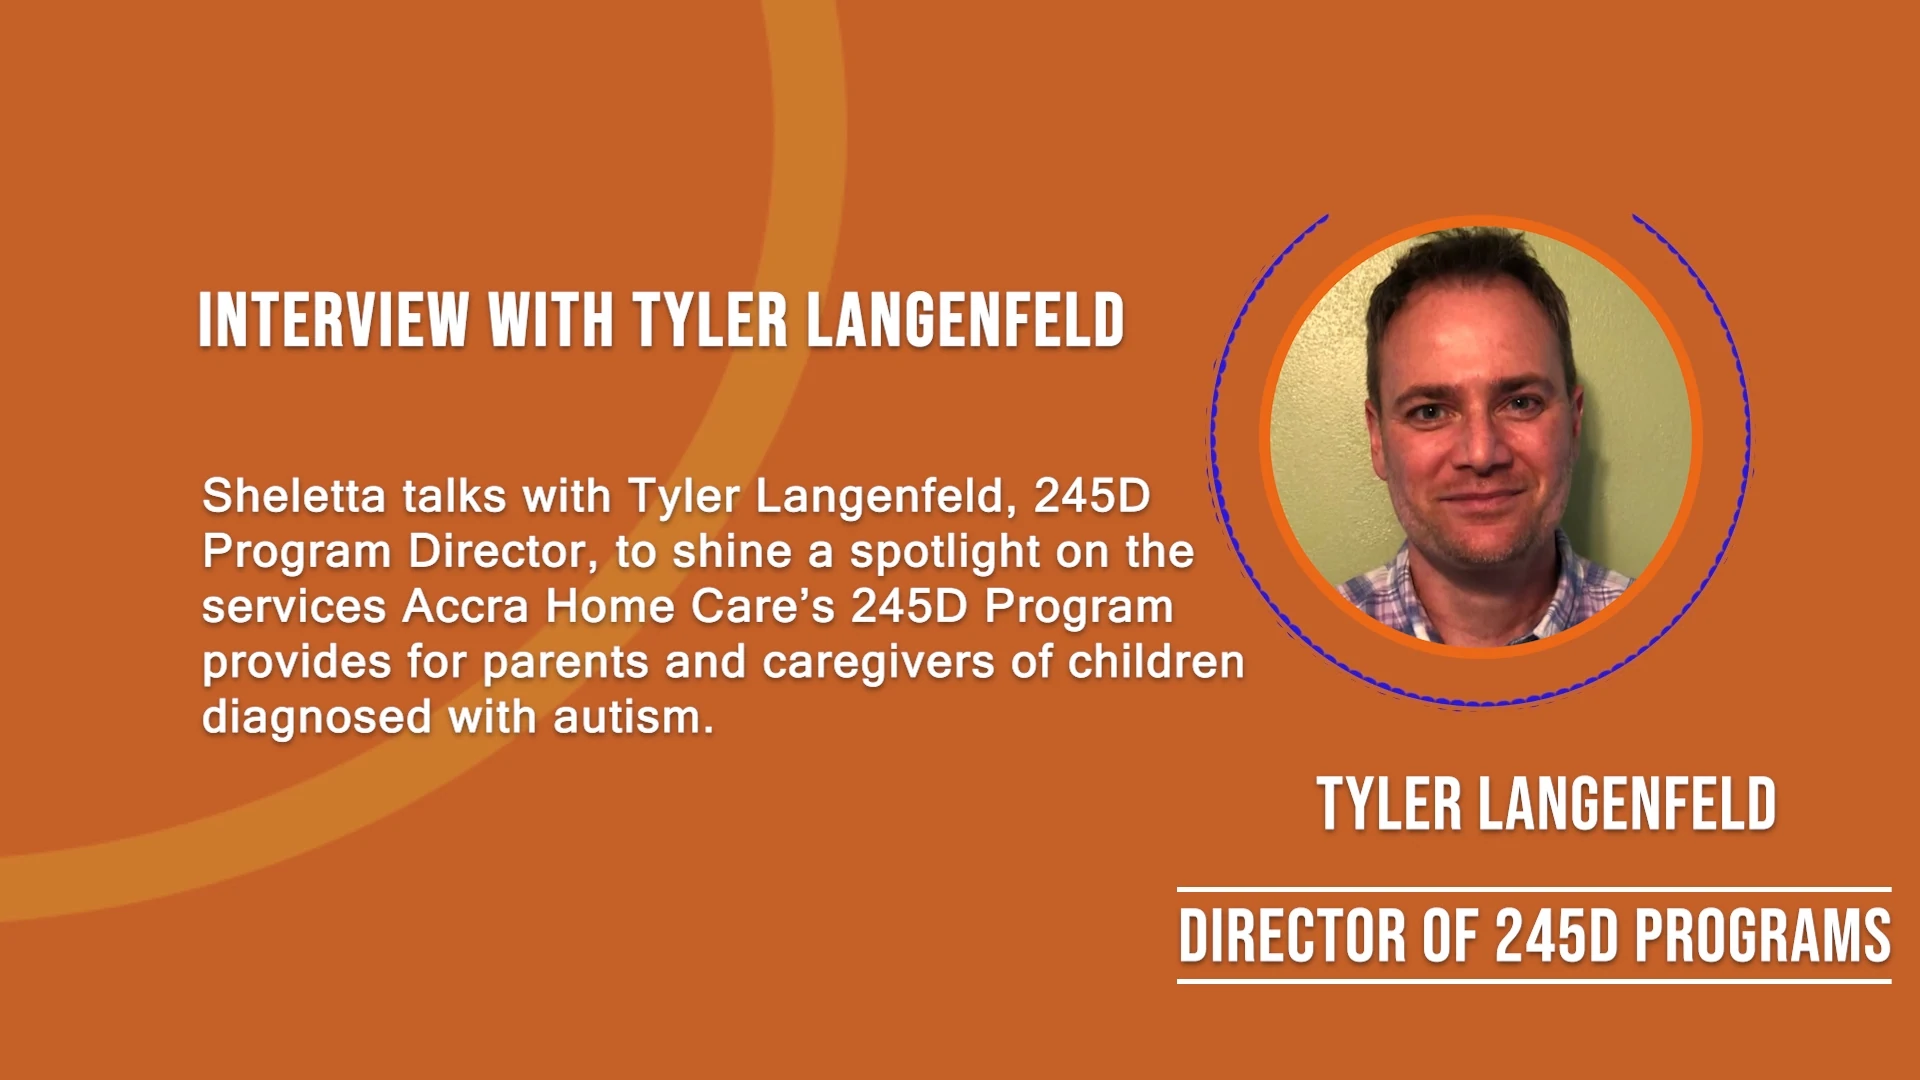 Tyler Langenfeld interviewed by Sheletta Brundidge